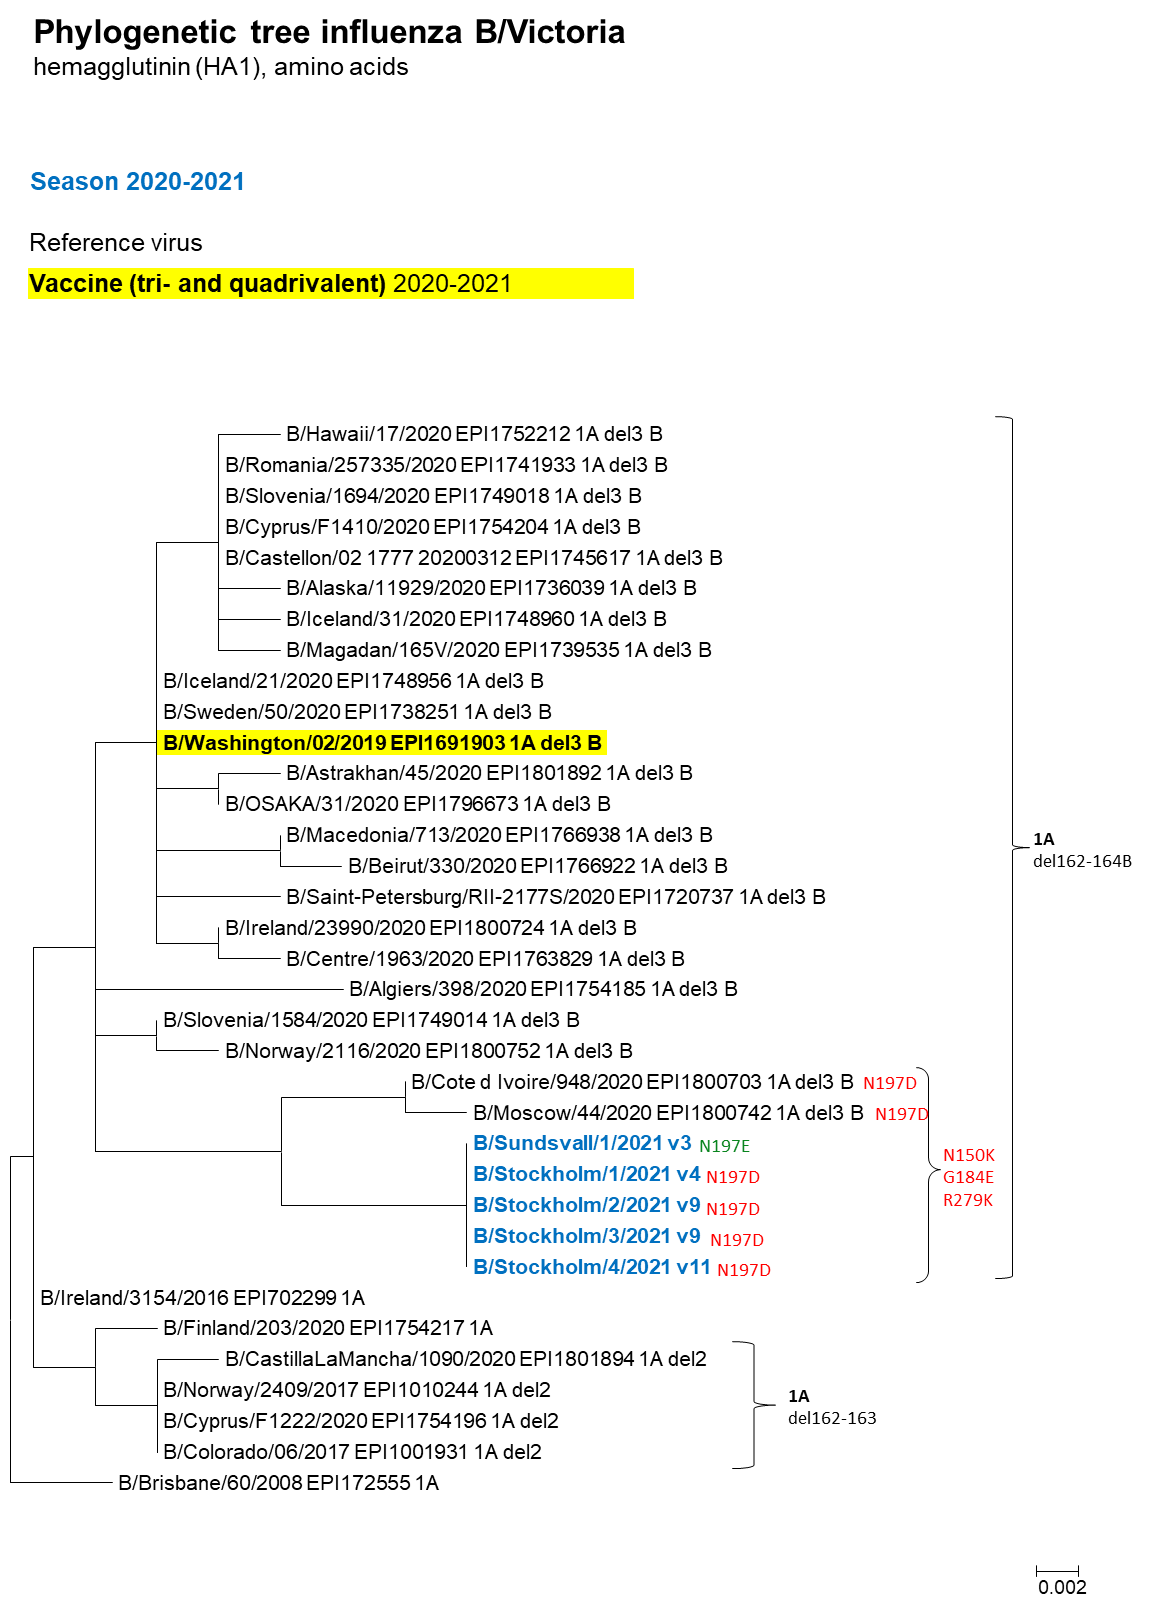 Phylogenetic tree for influenza B/Victoria.